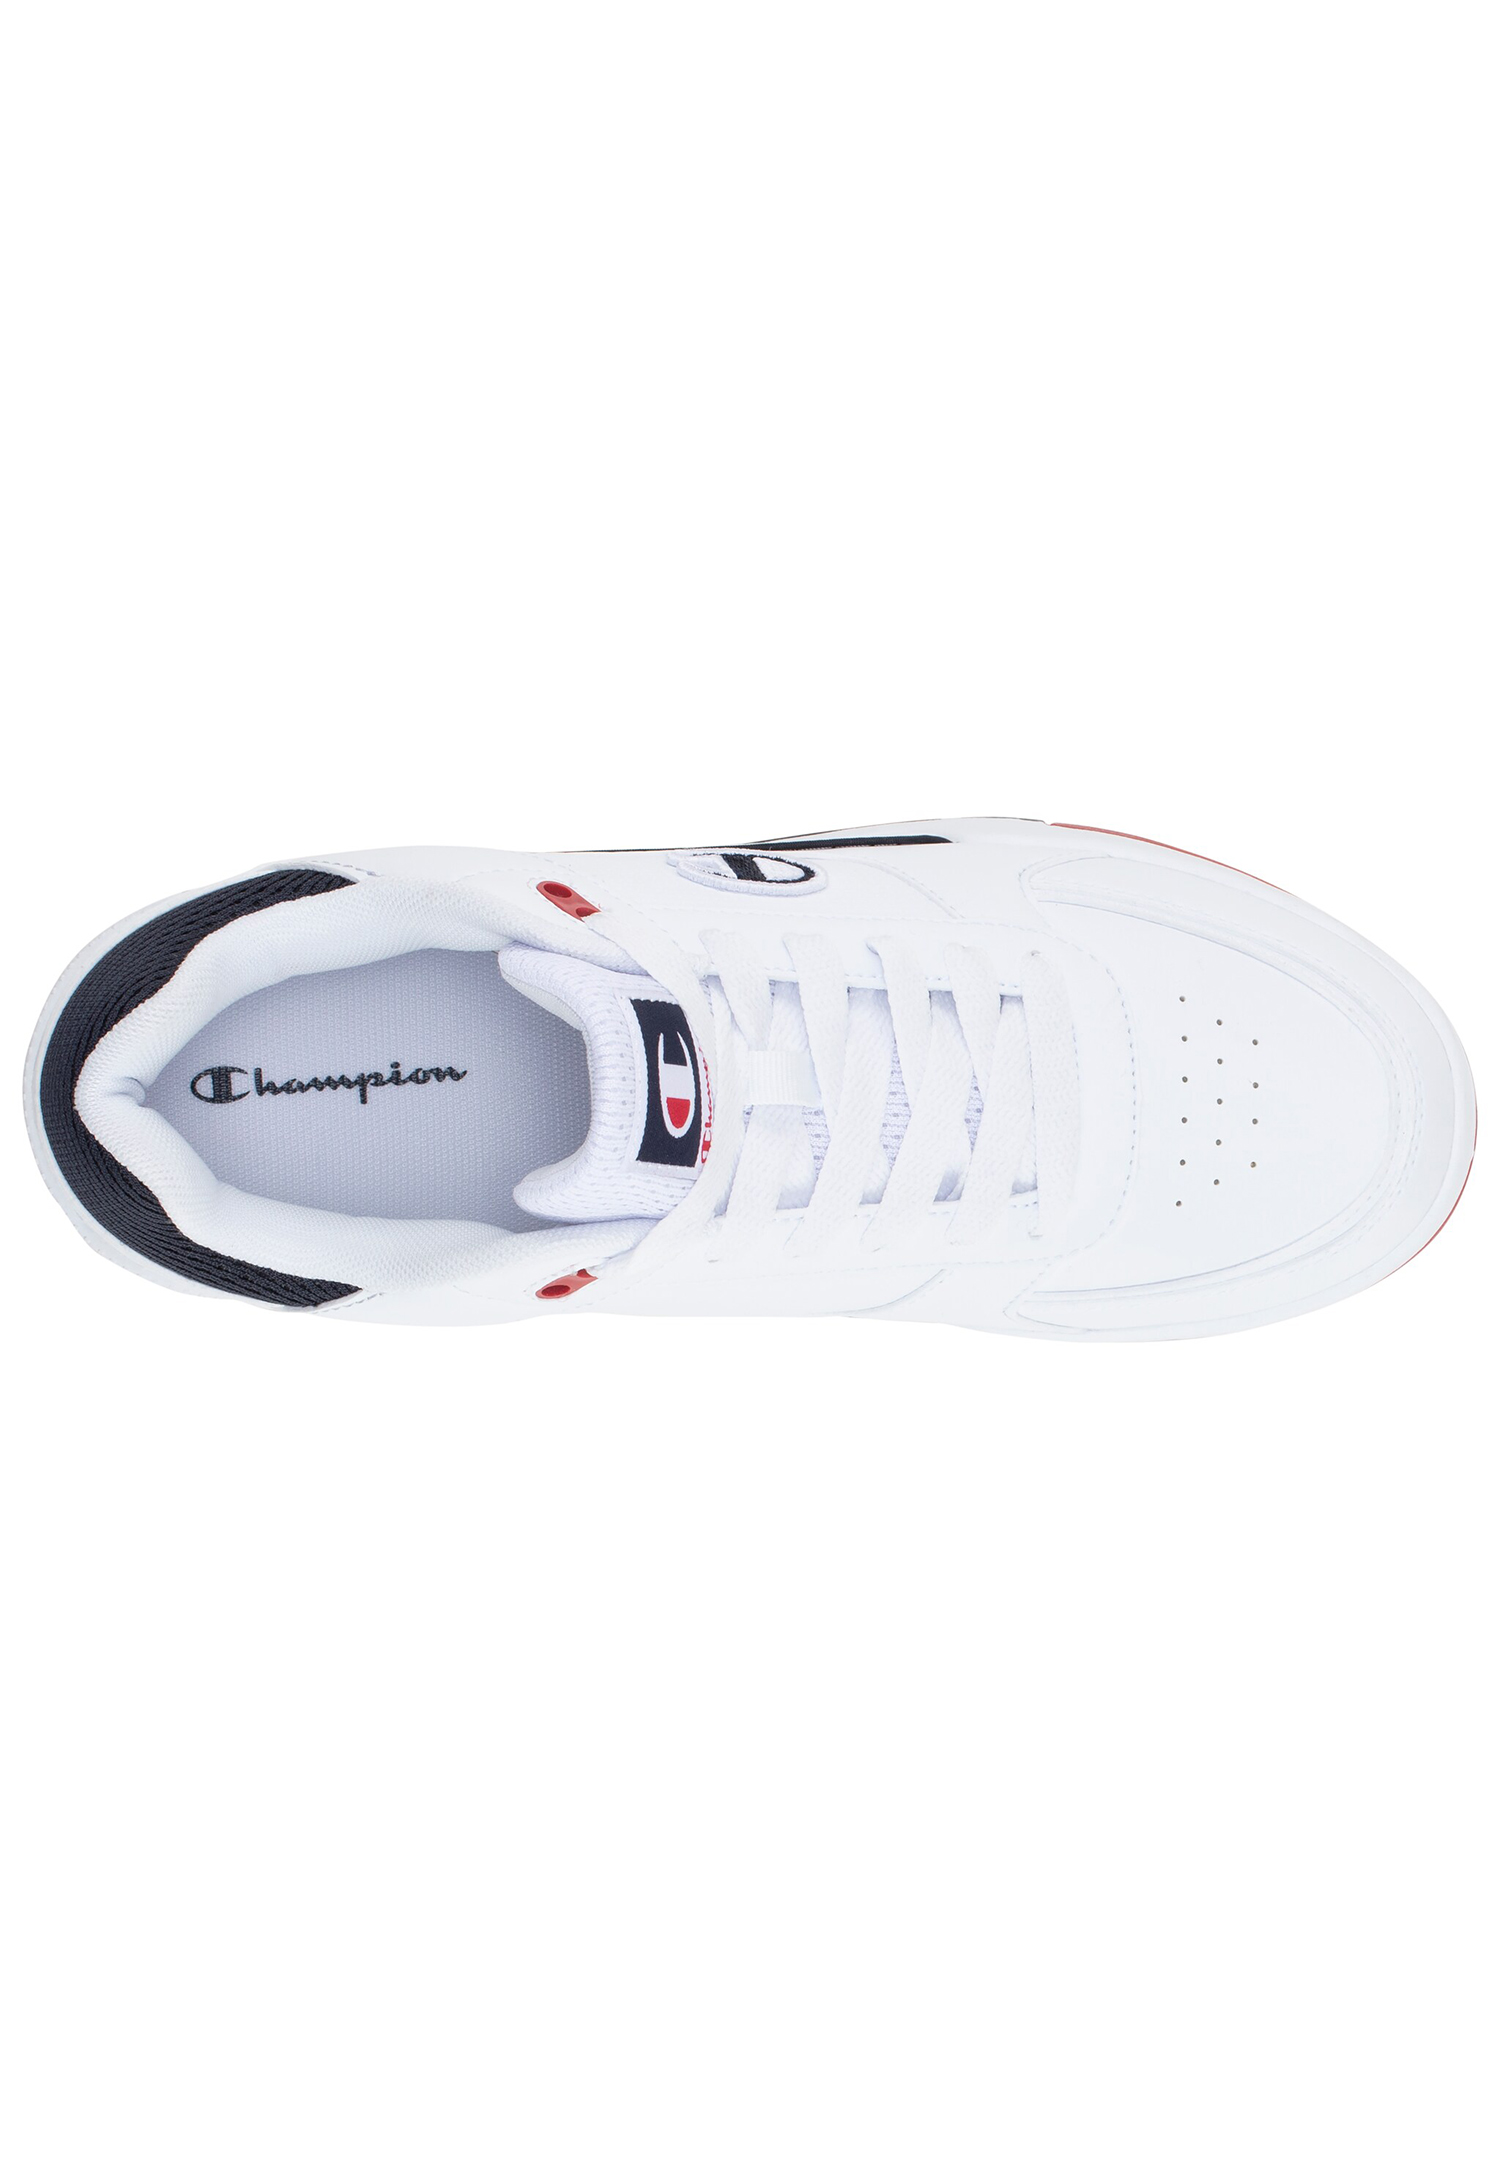 Champion REBOUND HERITAGE LOW Herren Sneaker S22030-CHA-WW005 weiß/blau/rot 